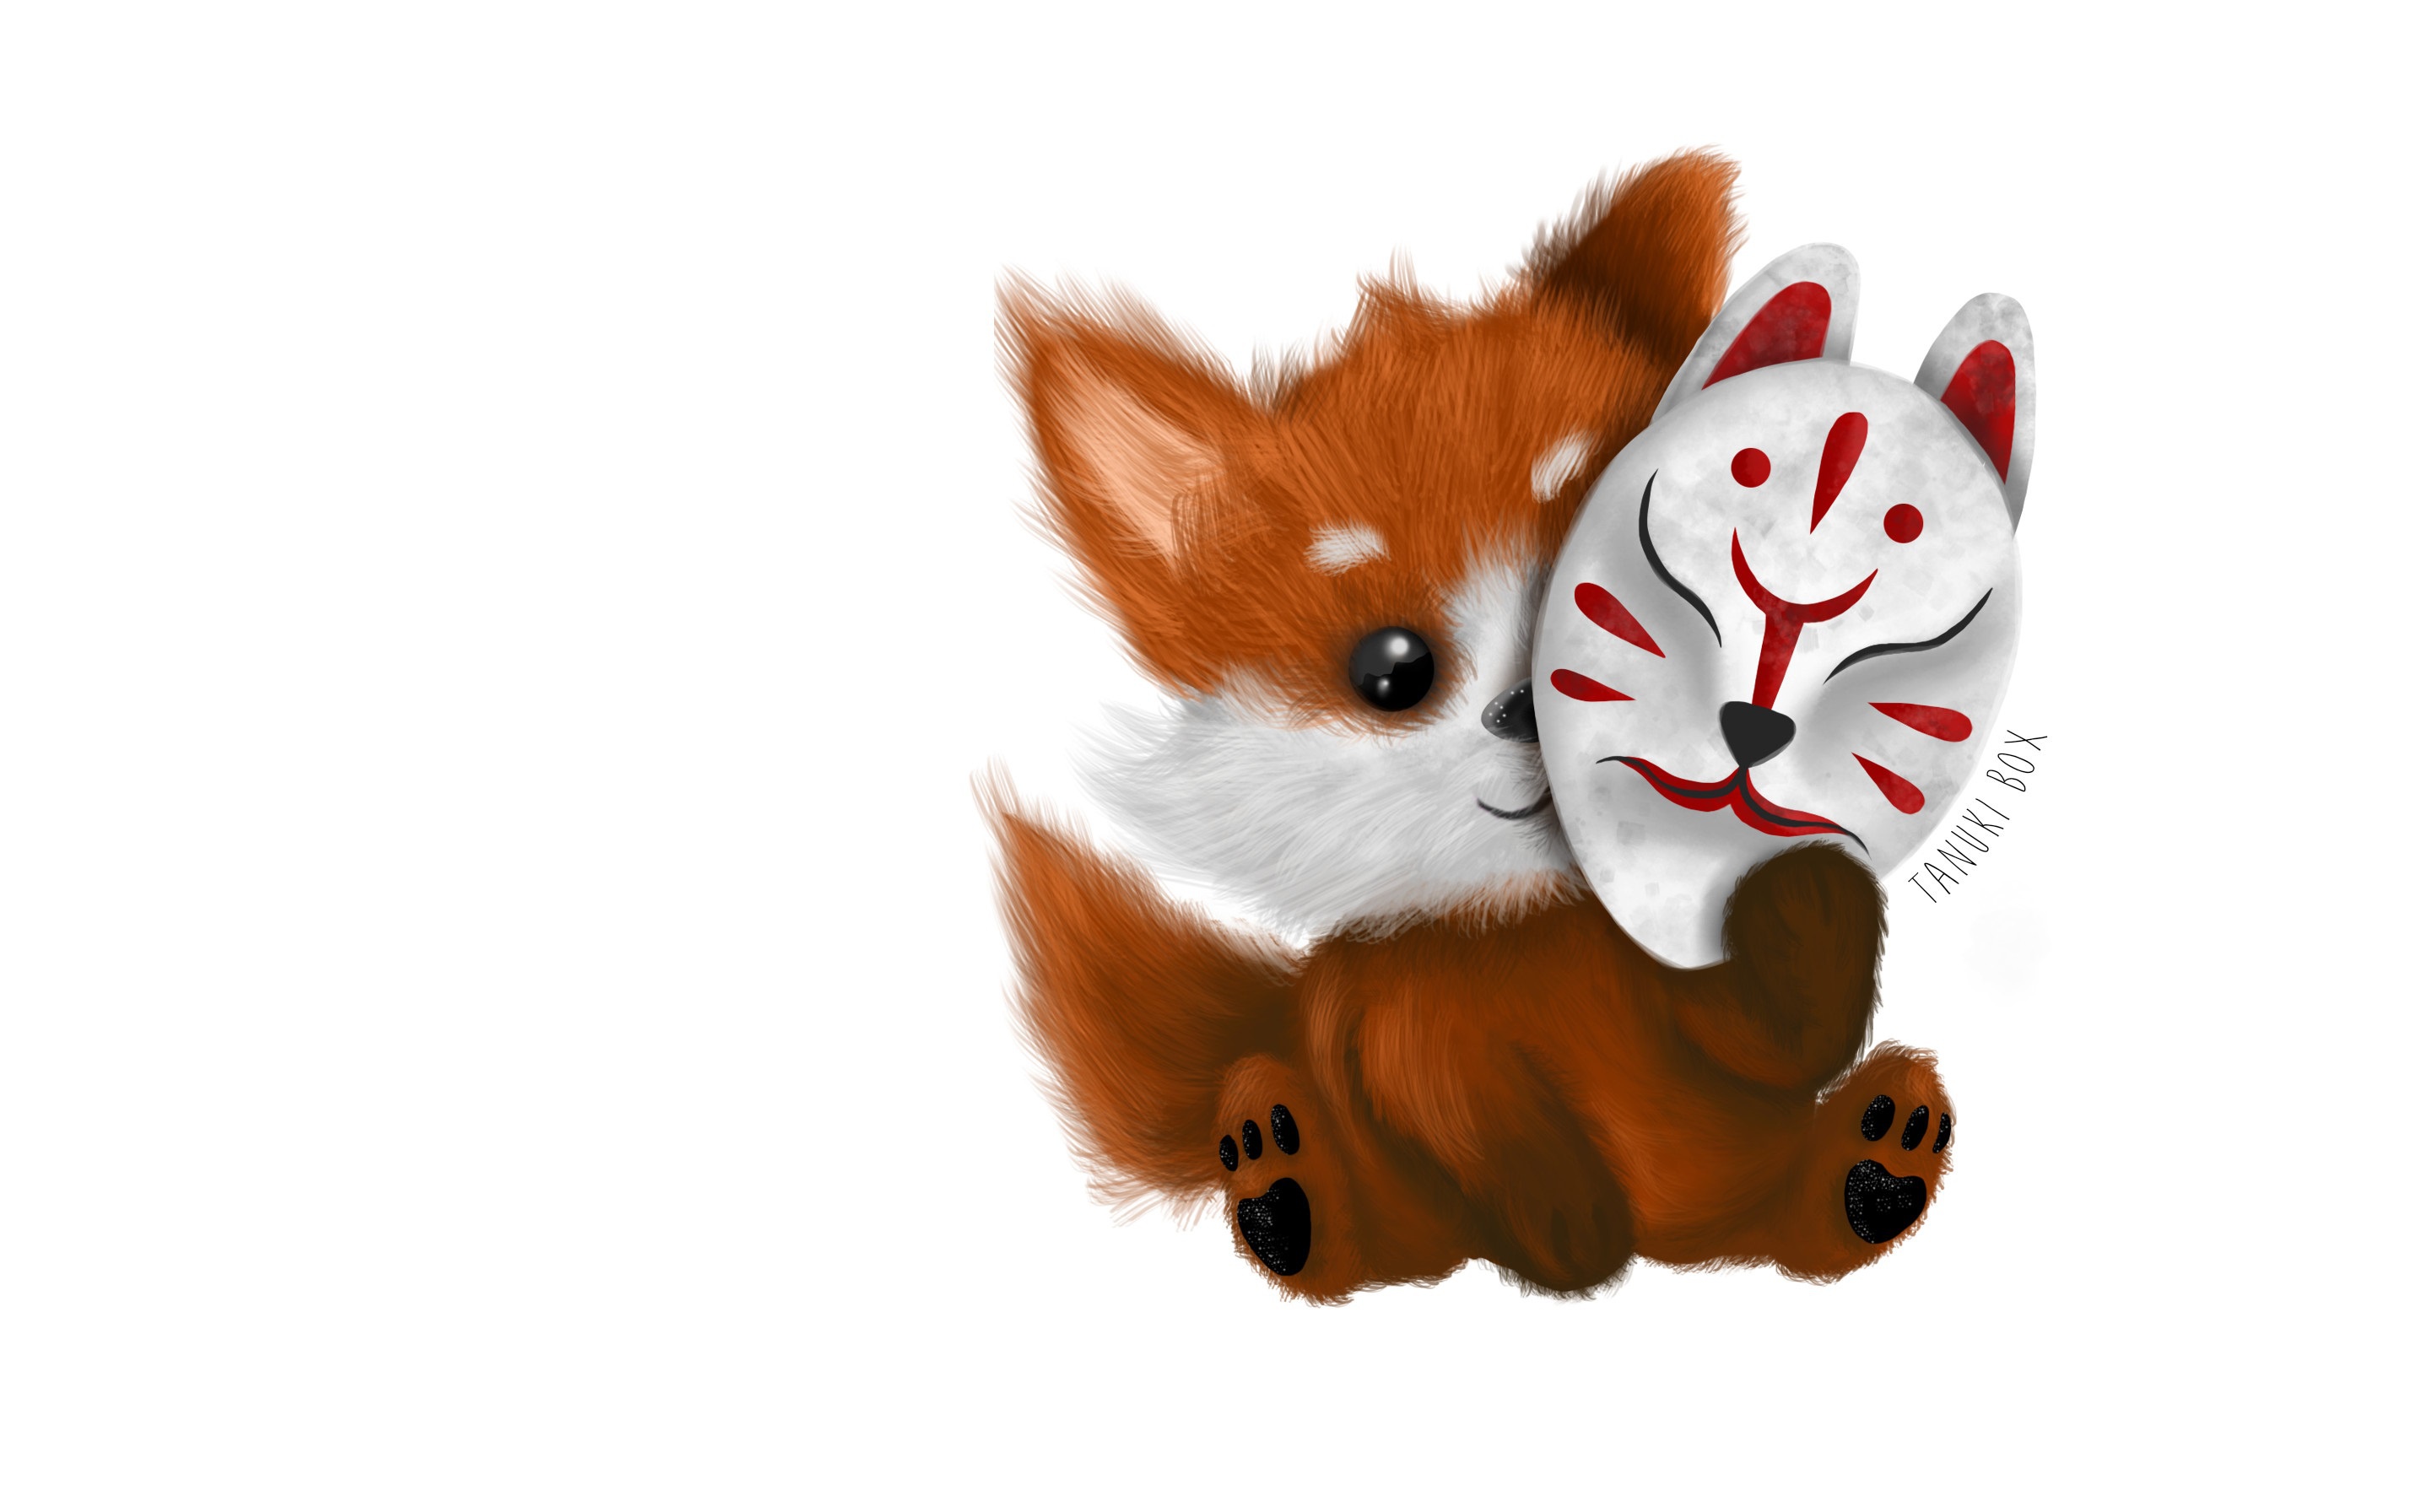 Cute Fox With a Fox Mask by Alejandra Morfín